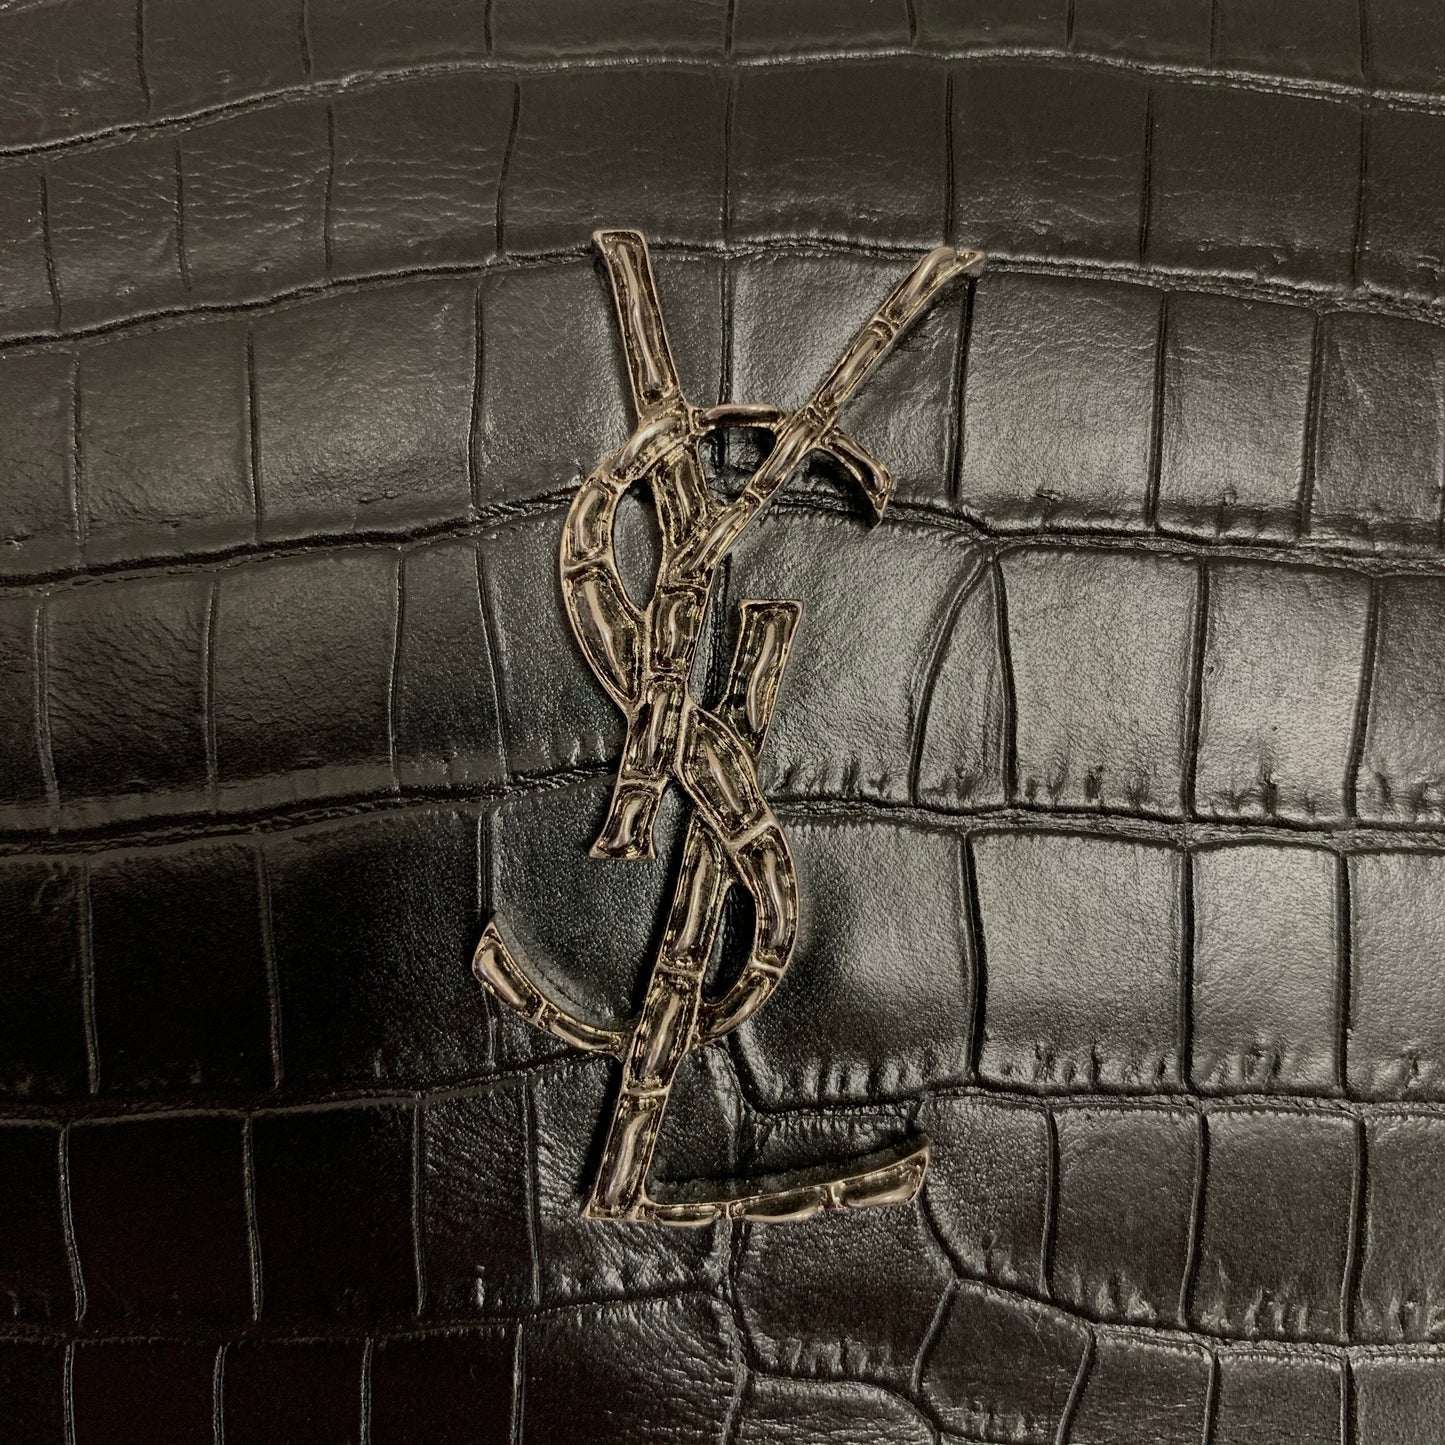 Authentic Saint Laurent Black Croc Camera Bag